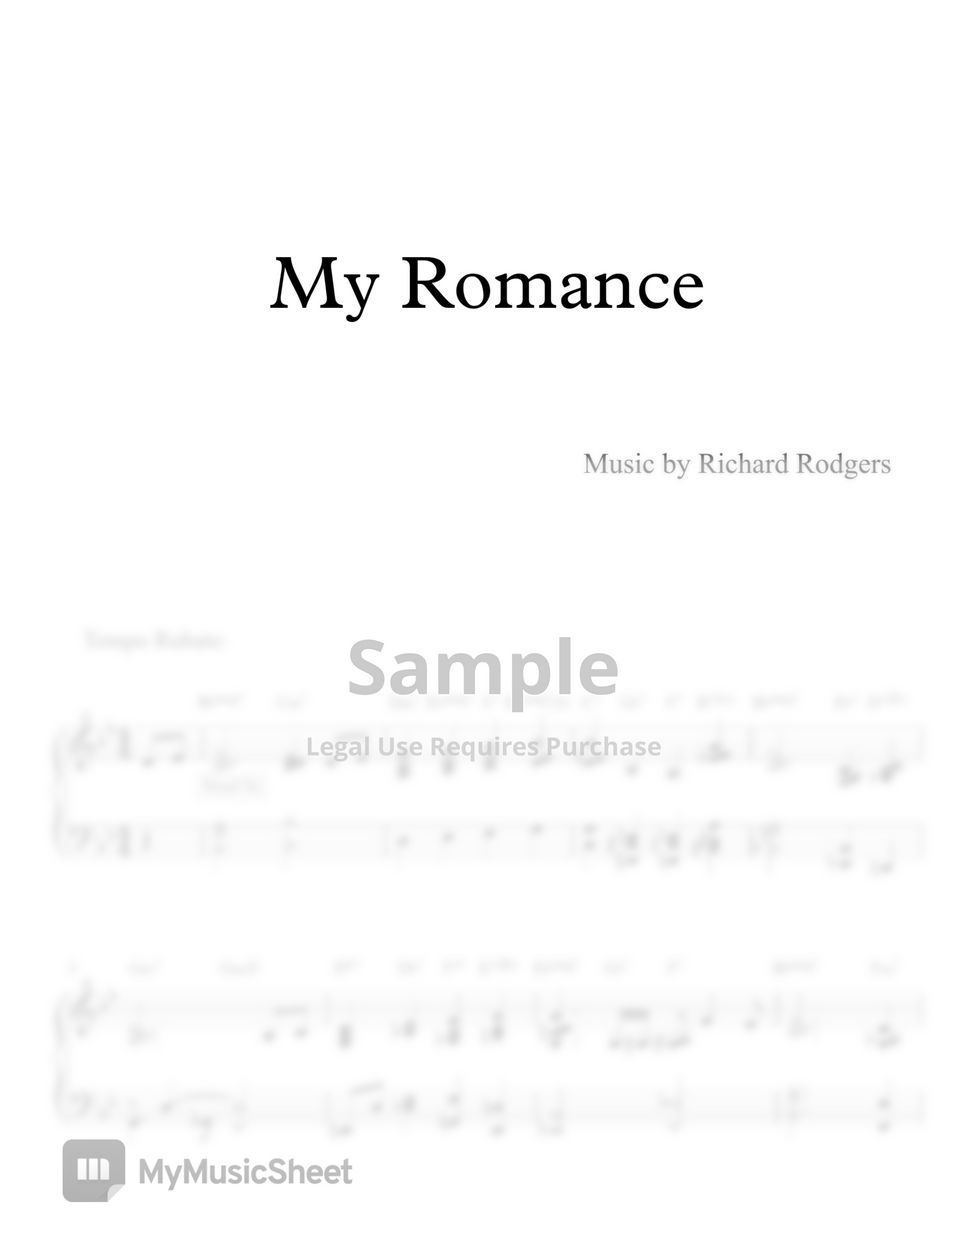 Richard Rodgers - My Romance by MIWHA